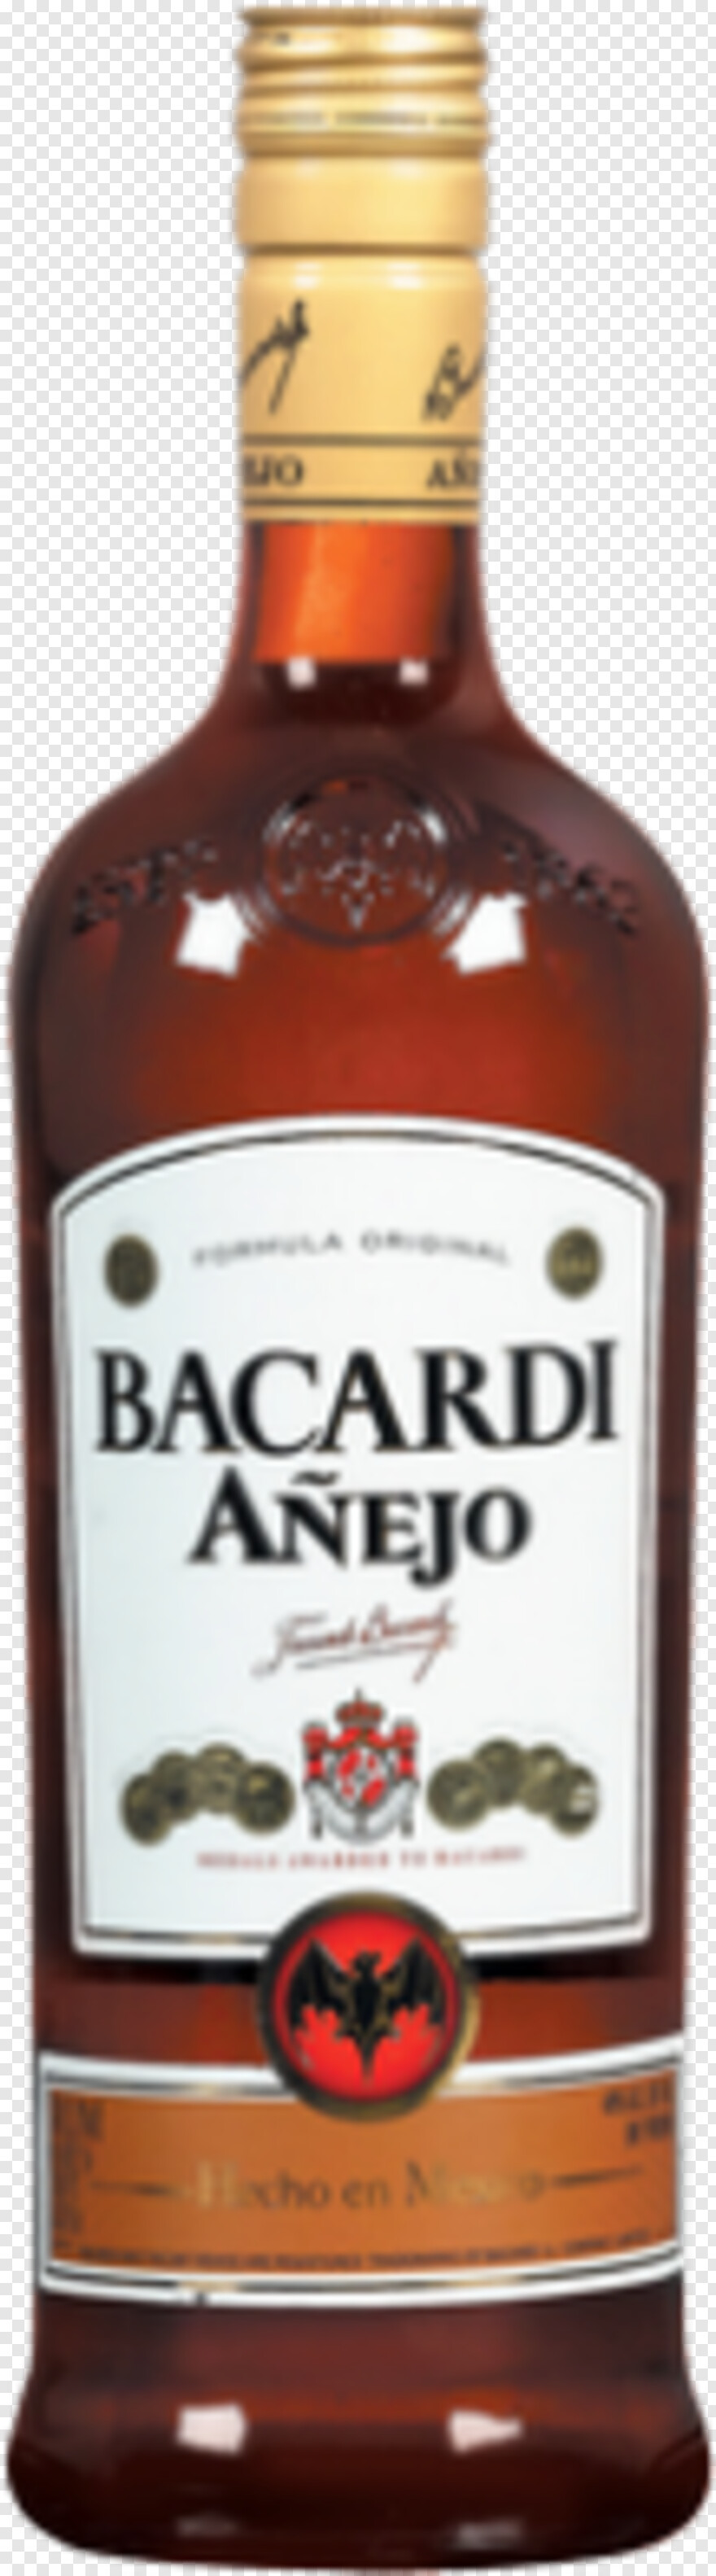 bacardi-logo # 630880